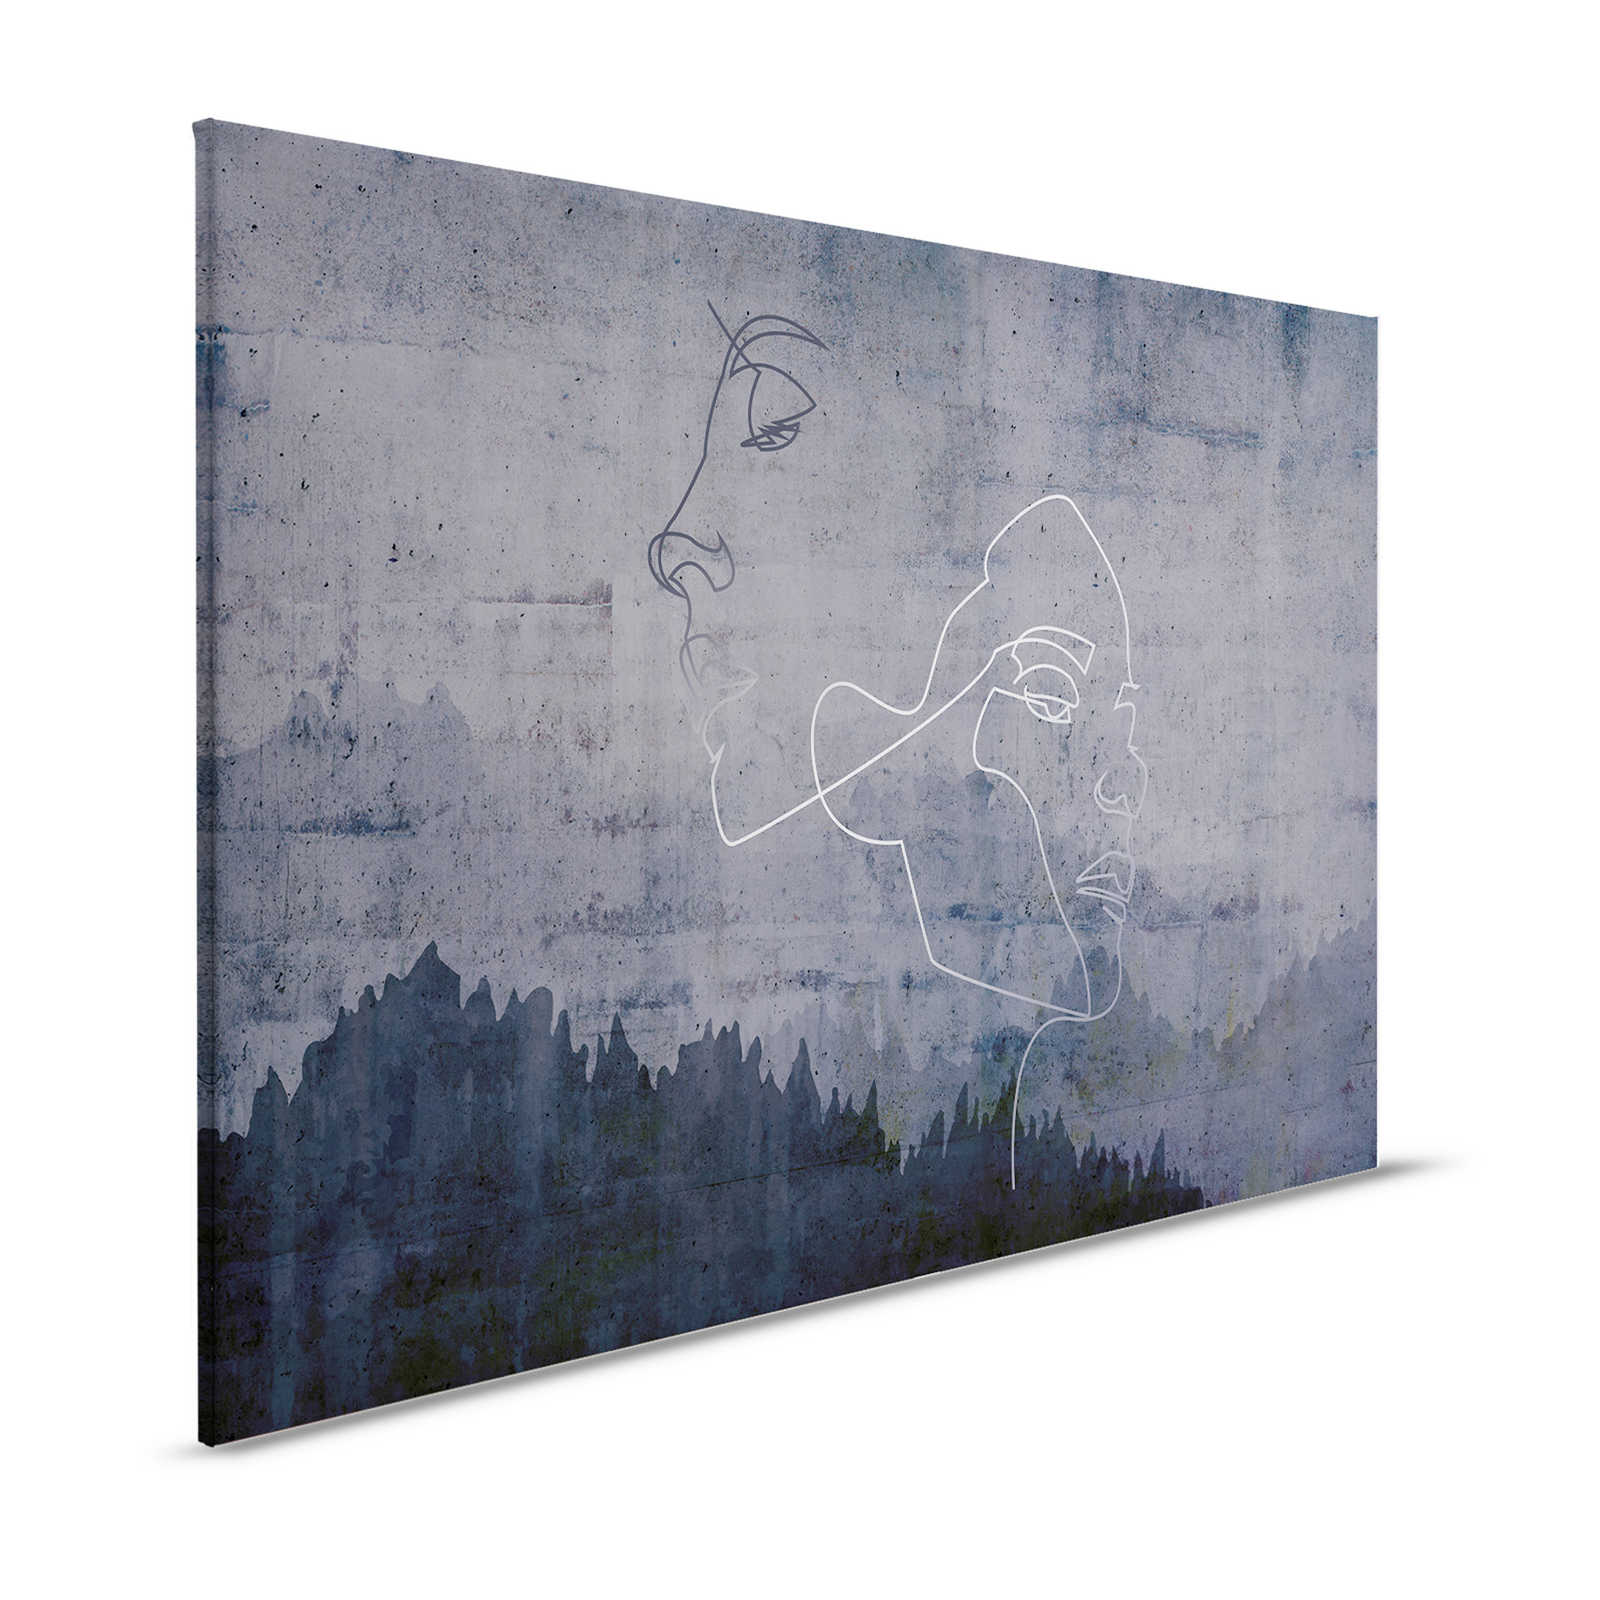 Canvas painting anthracite concrete look & silver line design - 1.20 m x 0.80 m
